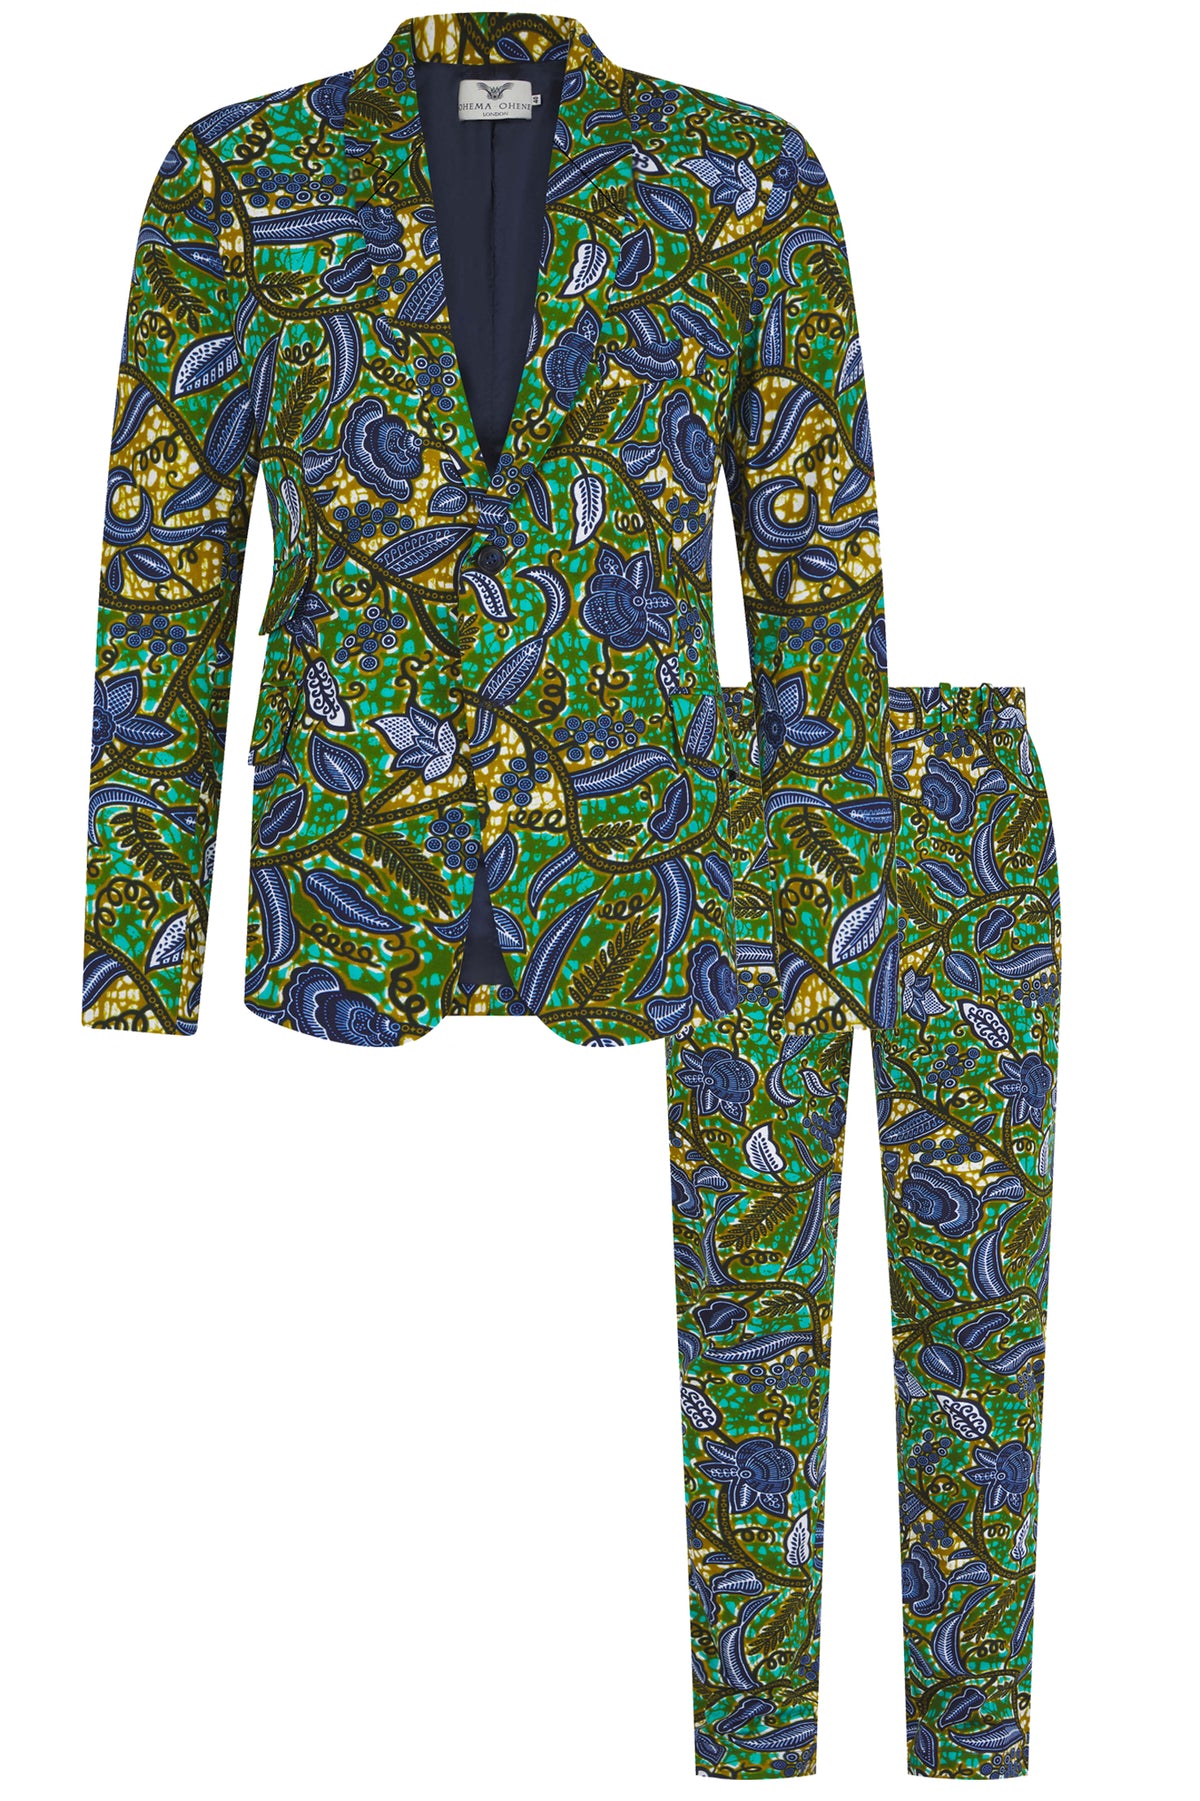 Boys African Print Green Floral Suit set